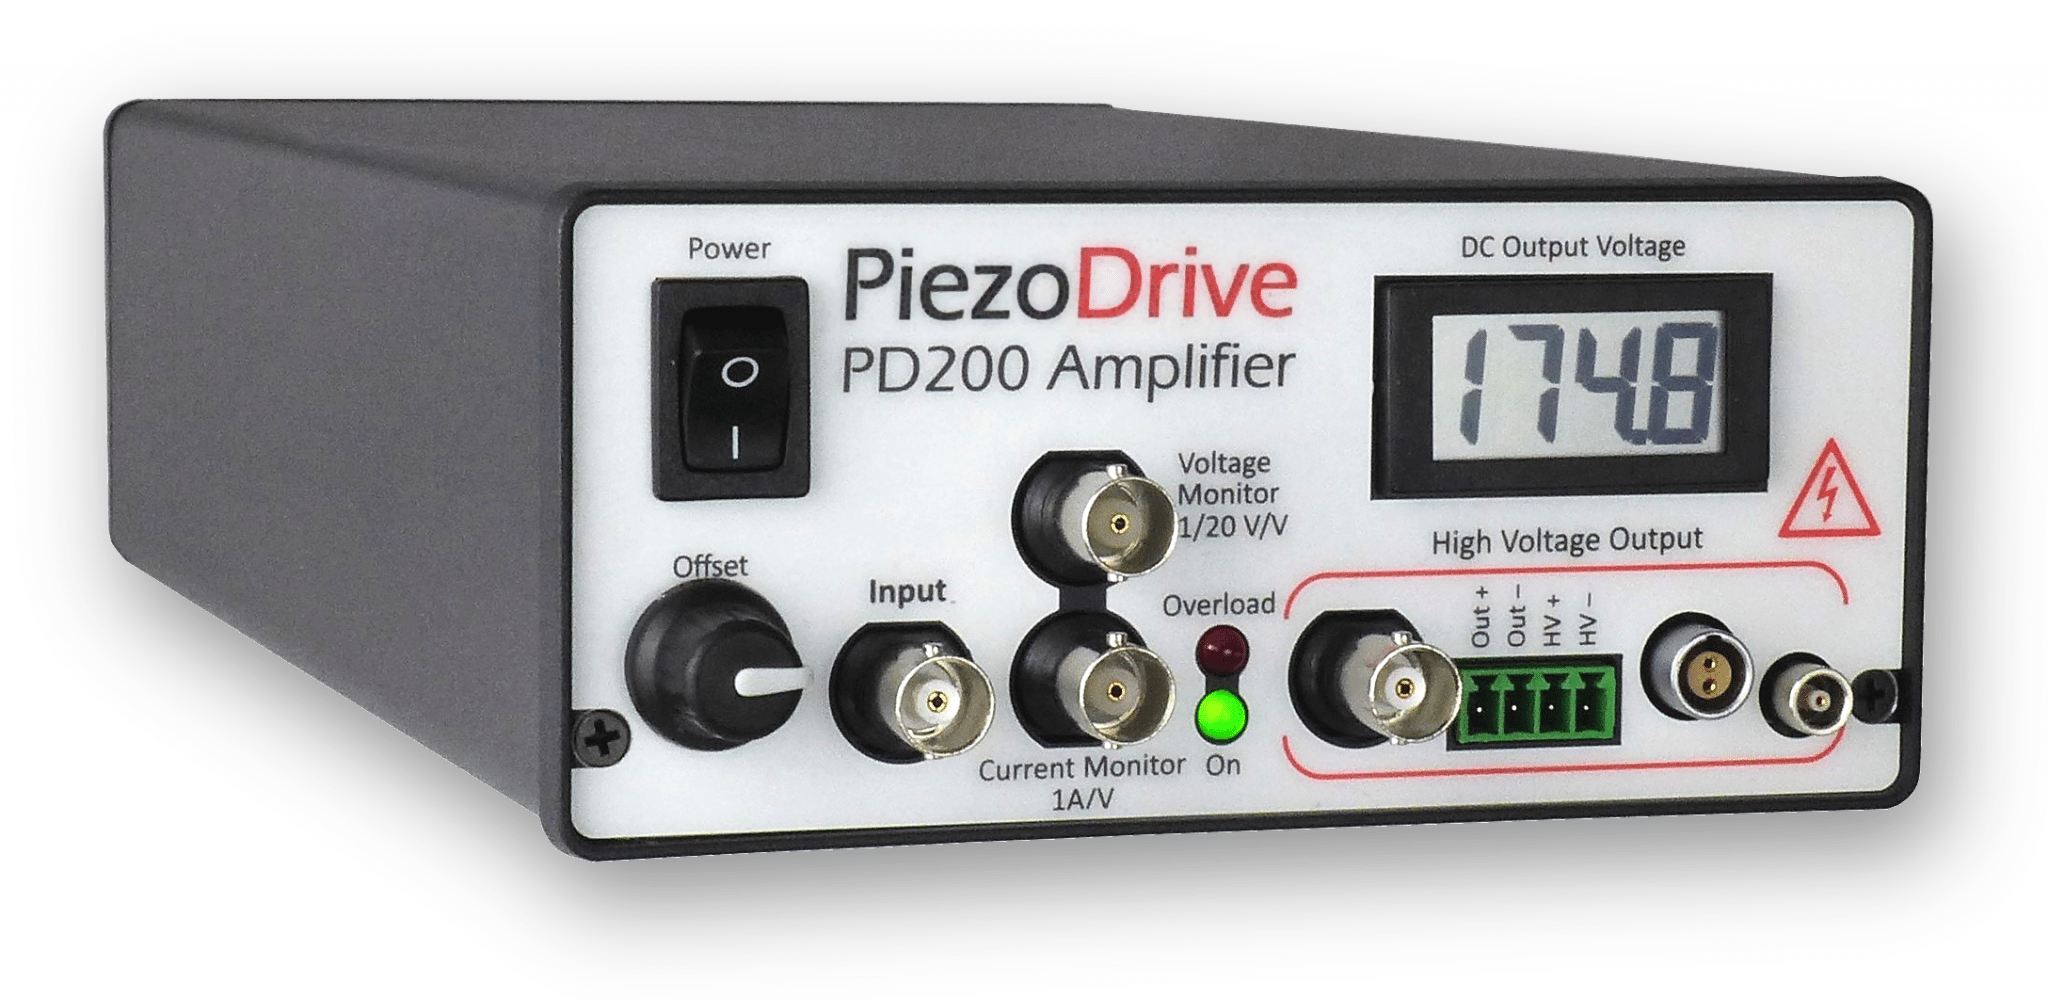 PD200压电驱动器, 60瓦电压放大器，适用于电光、超声波、振动控制、纳米定位系统和压电电机等各种应用